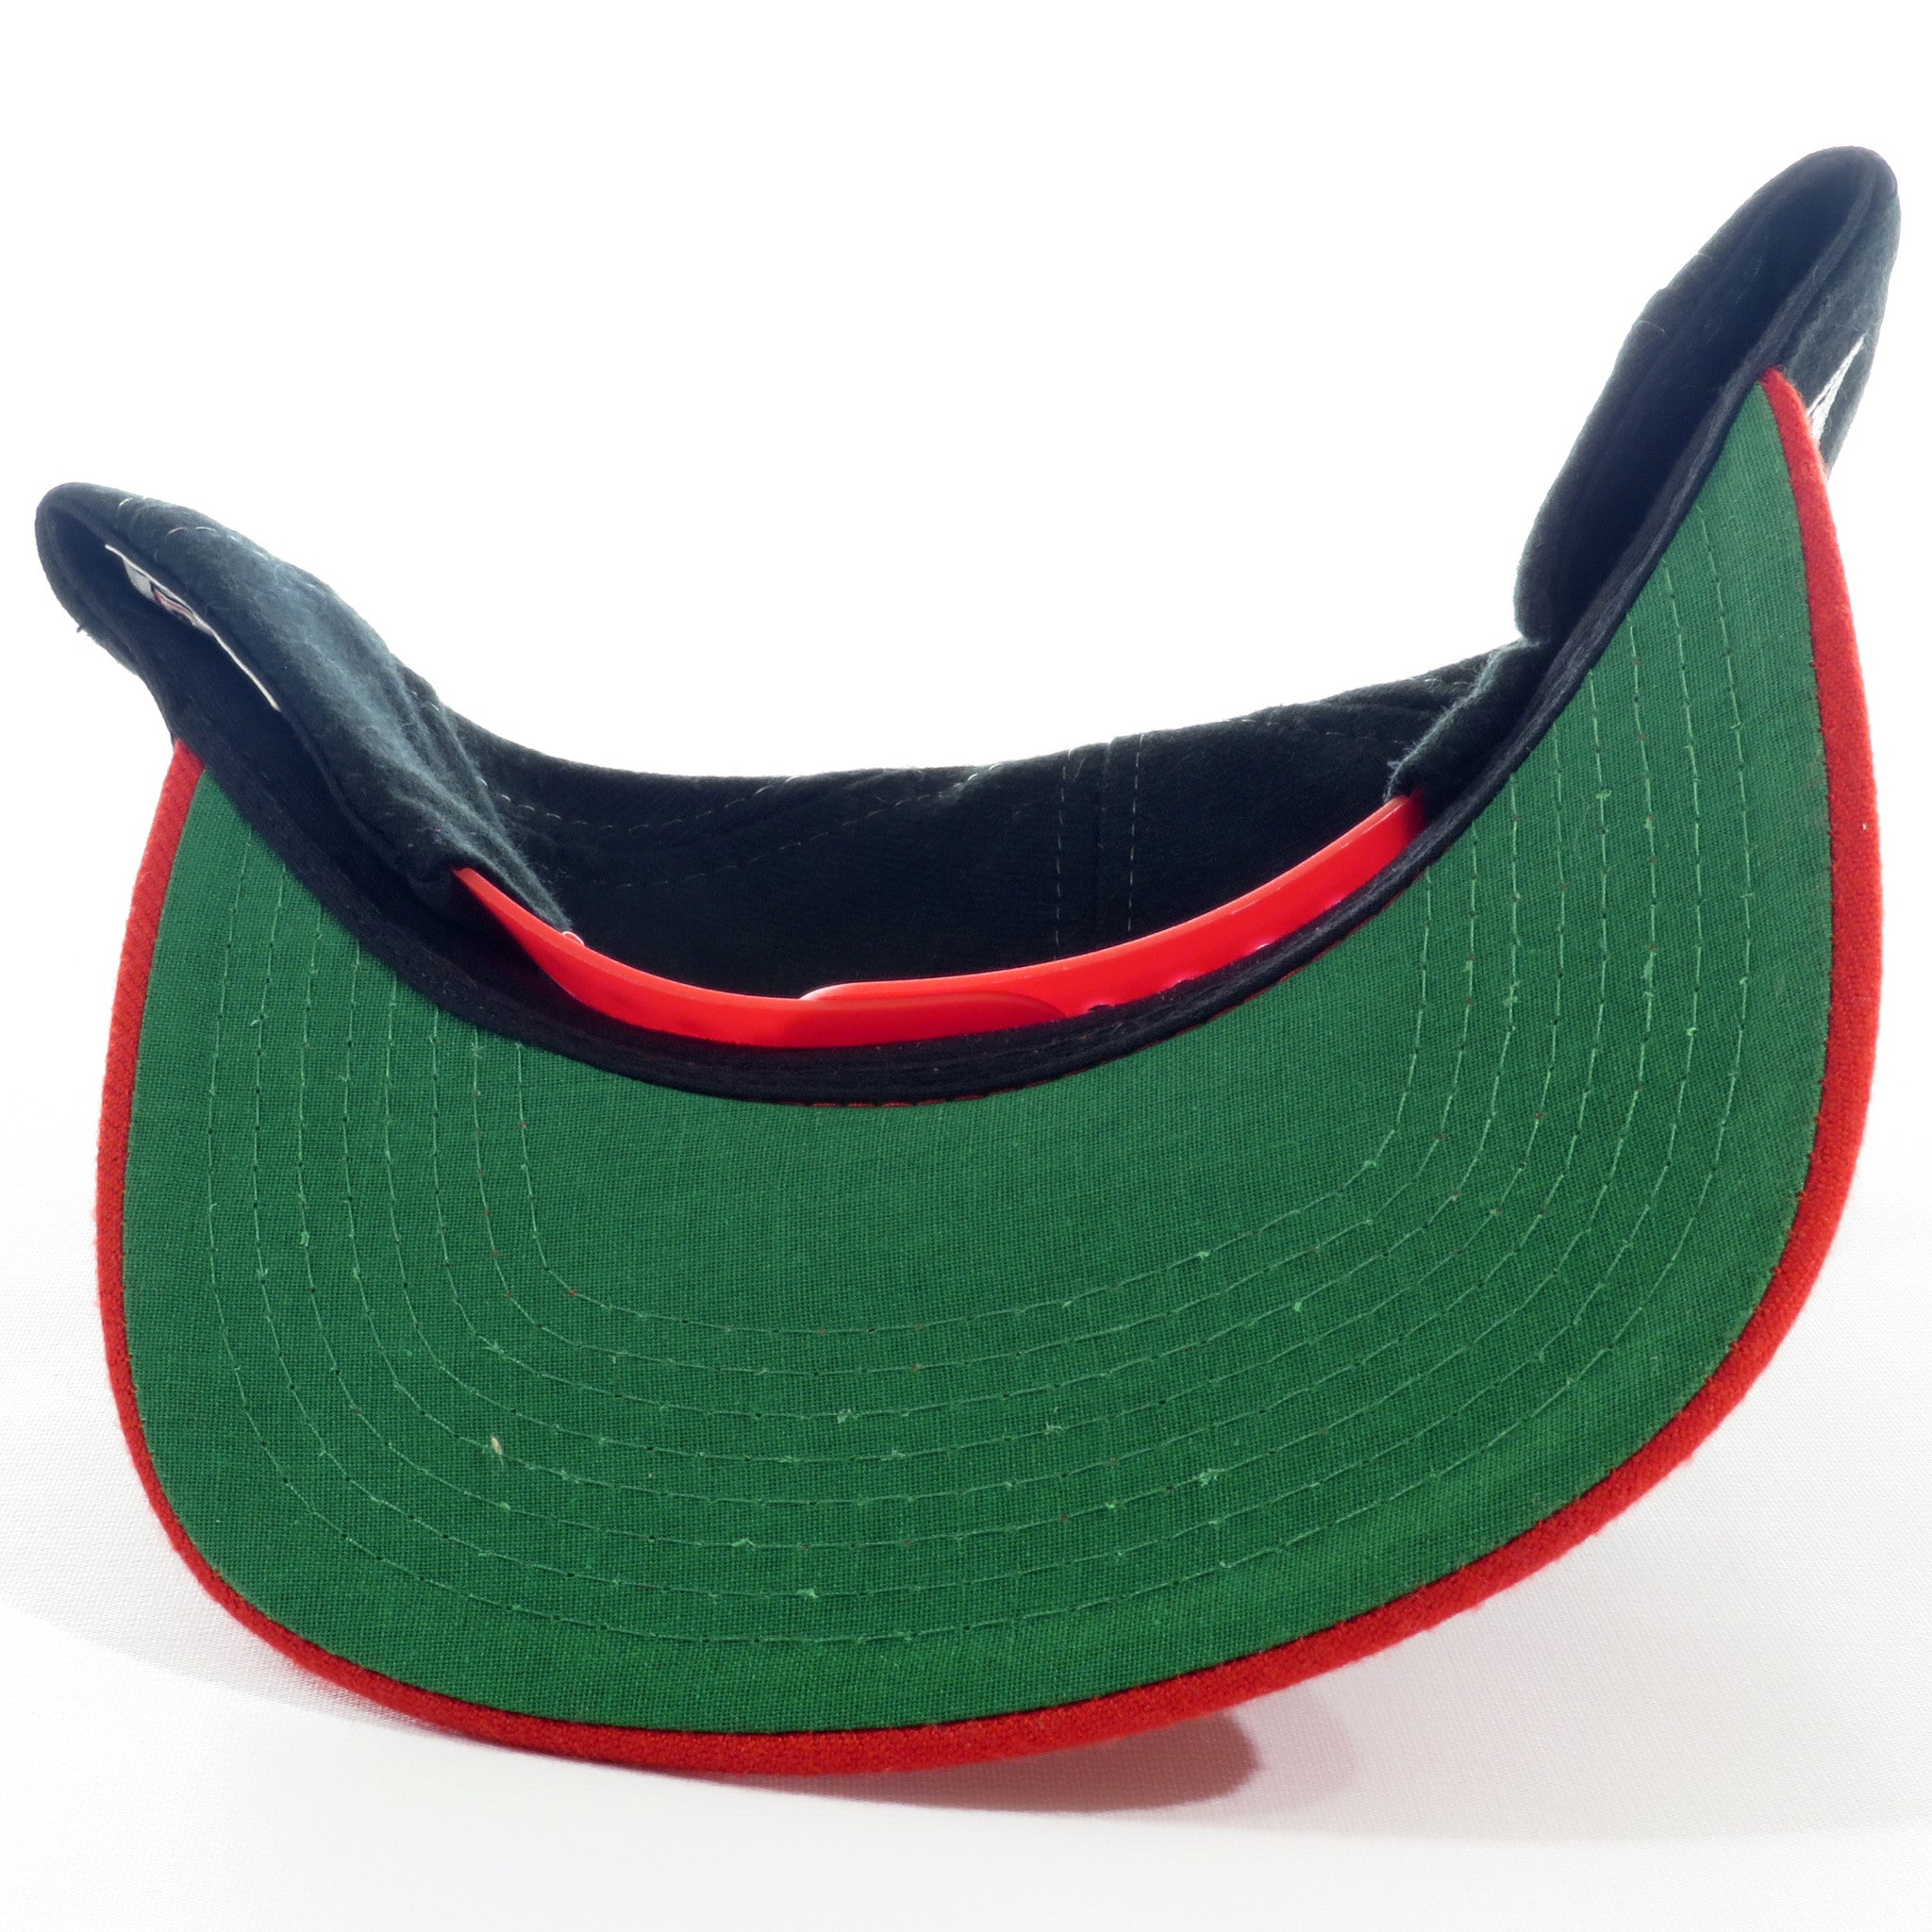 Atlanta Falcons Apex Snapback Hat